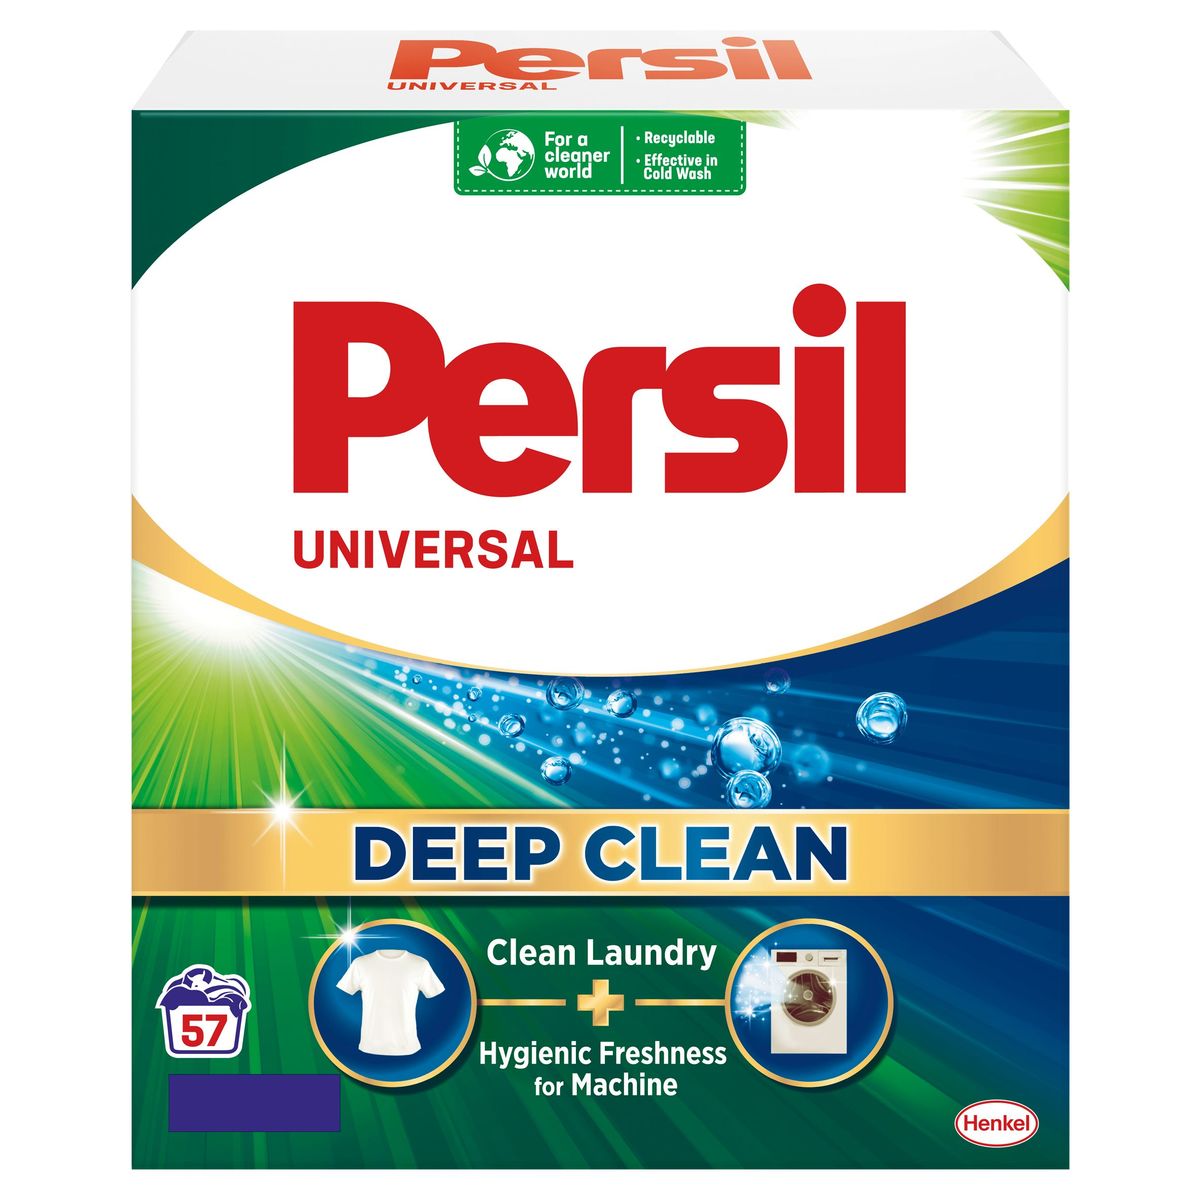 Persil Powder Universal 57 lavages -3.42 KG